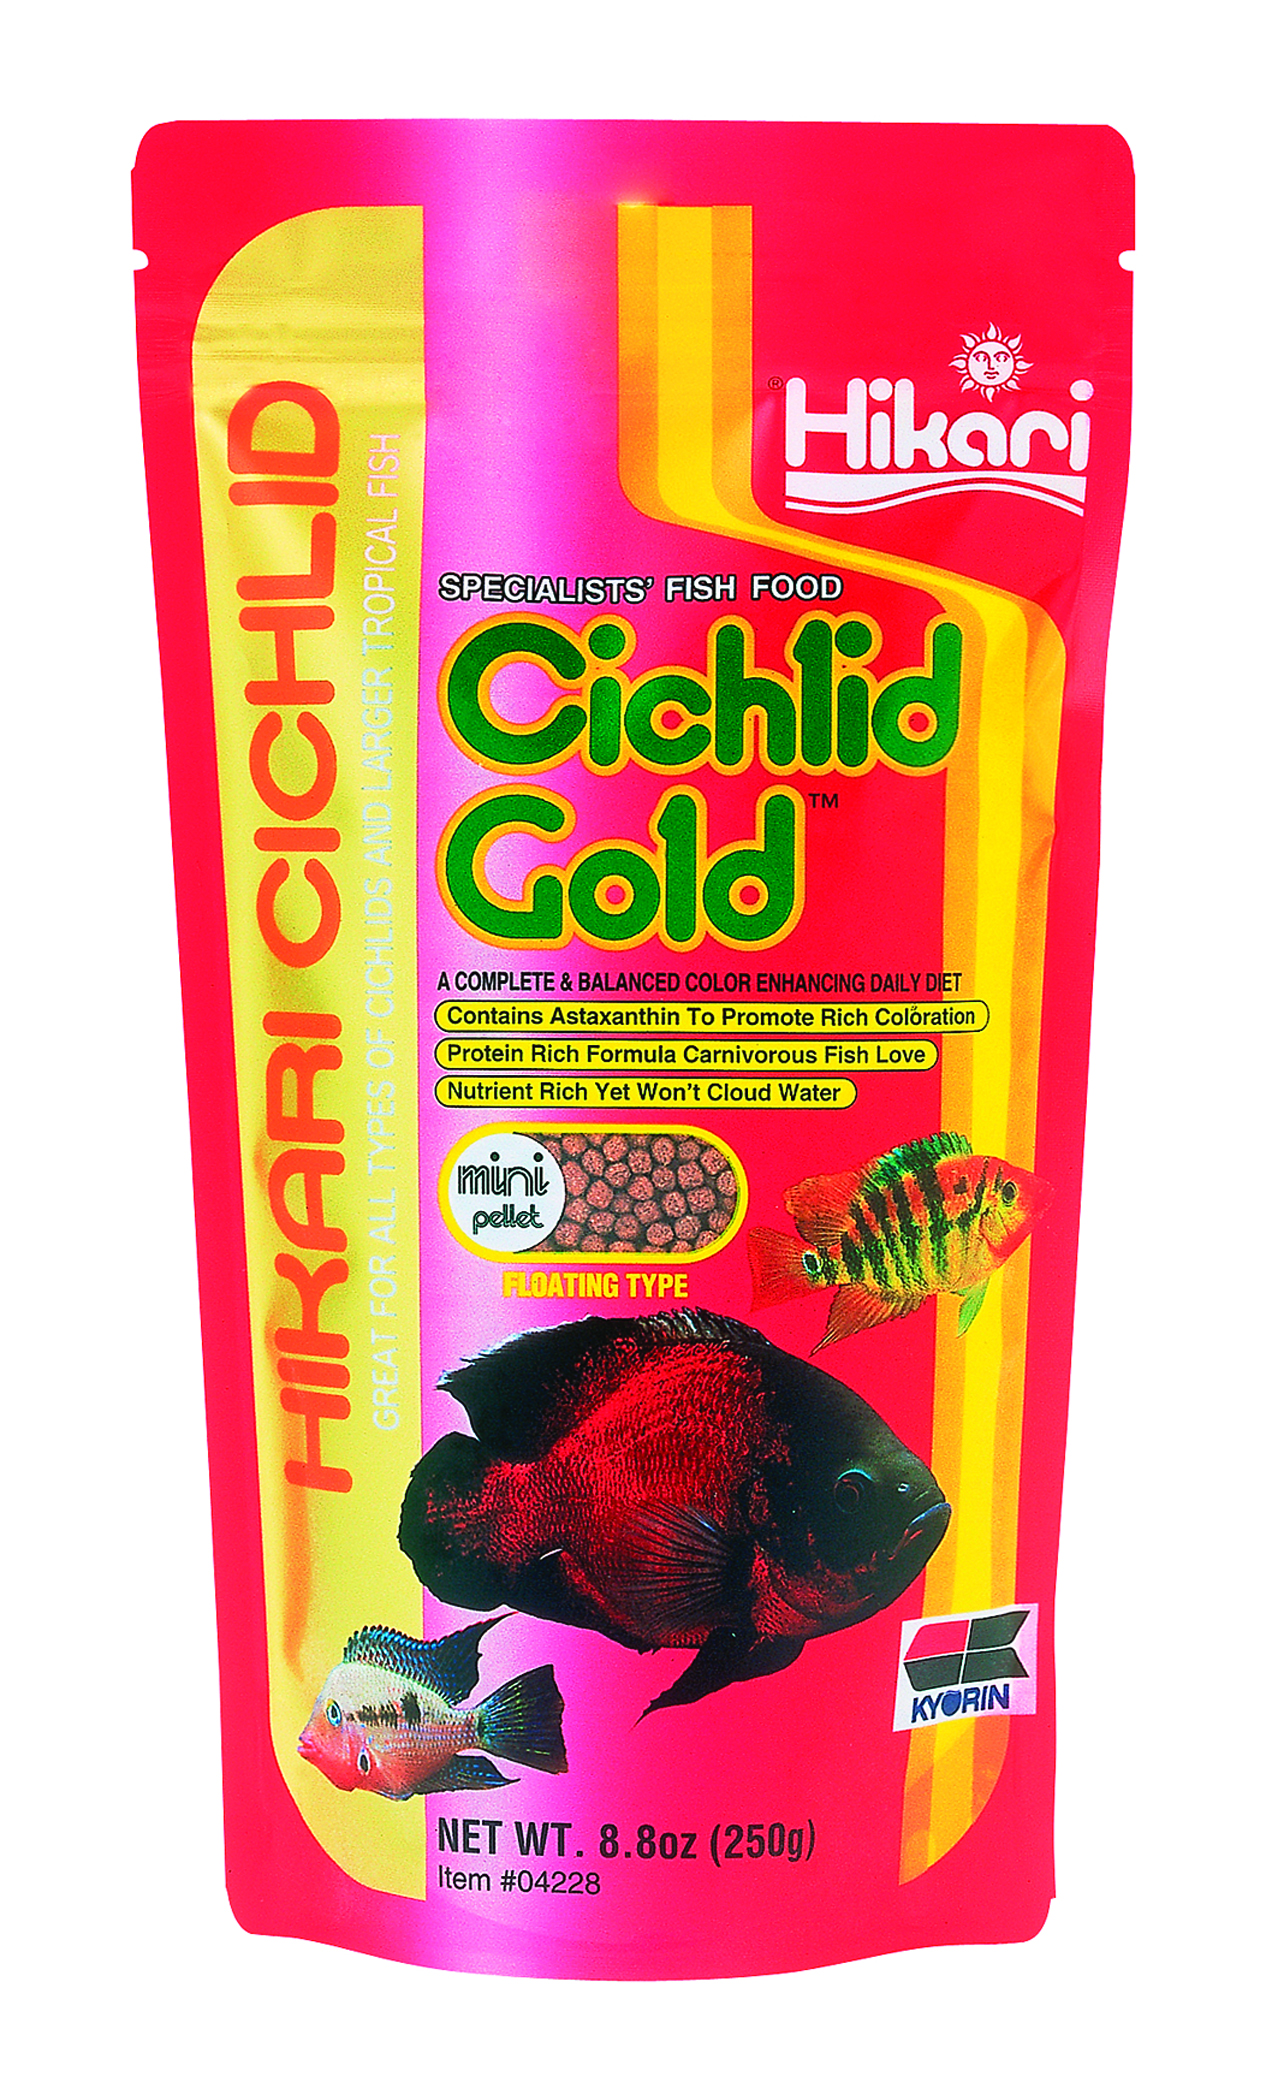 Cichlid Gold Mini